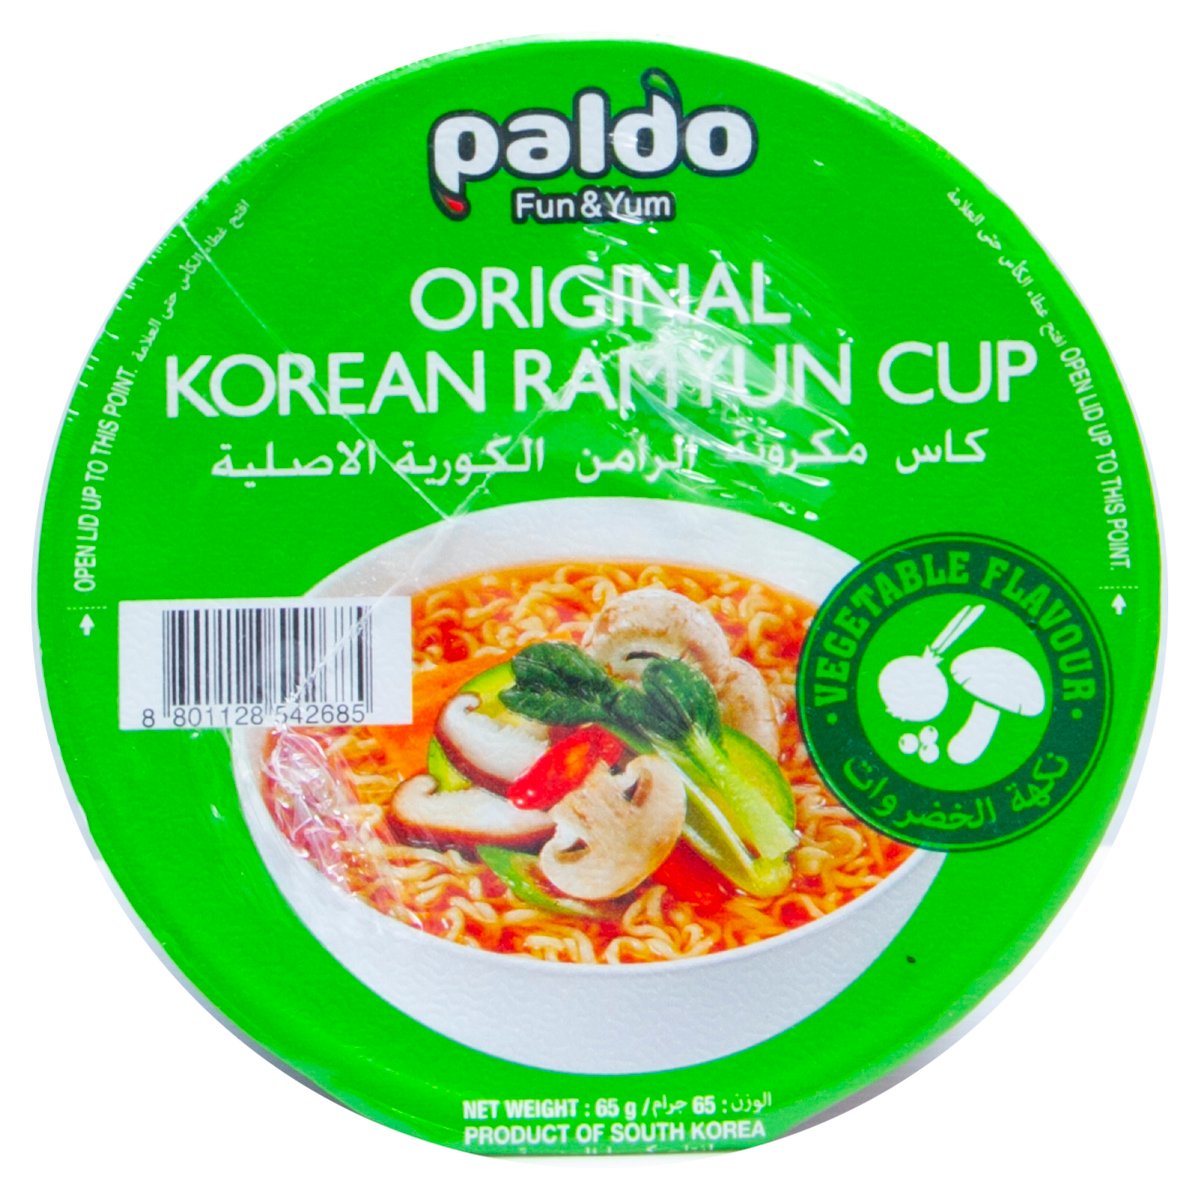 Paldo Original Korean Ramyun Cup Noodles Vegetable Flavour, 60 g